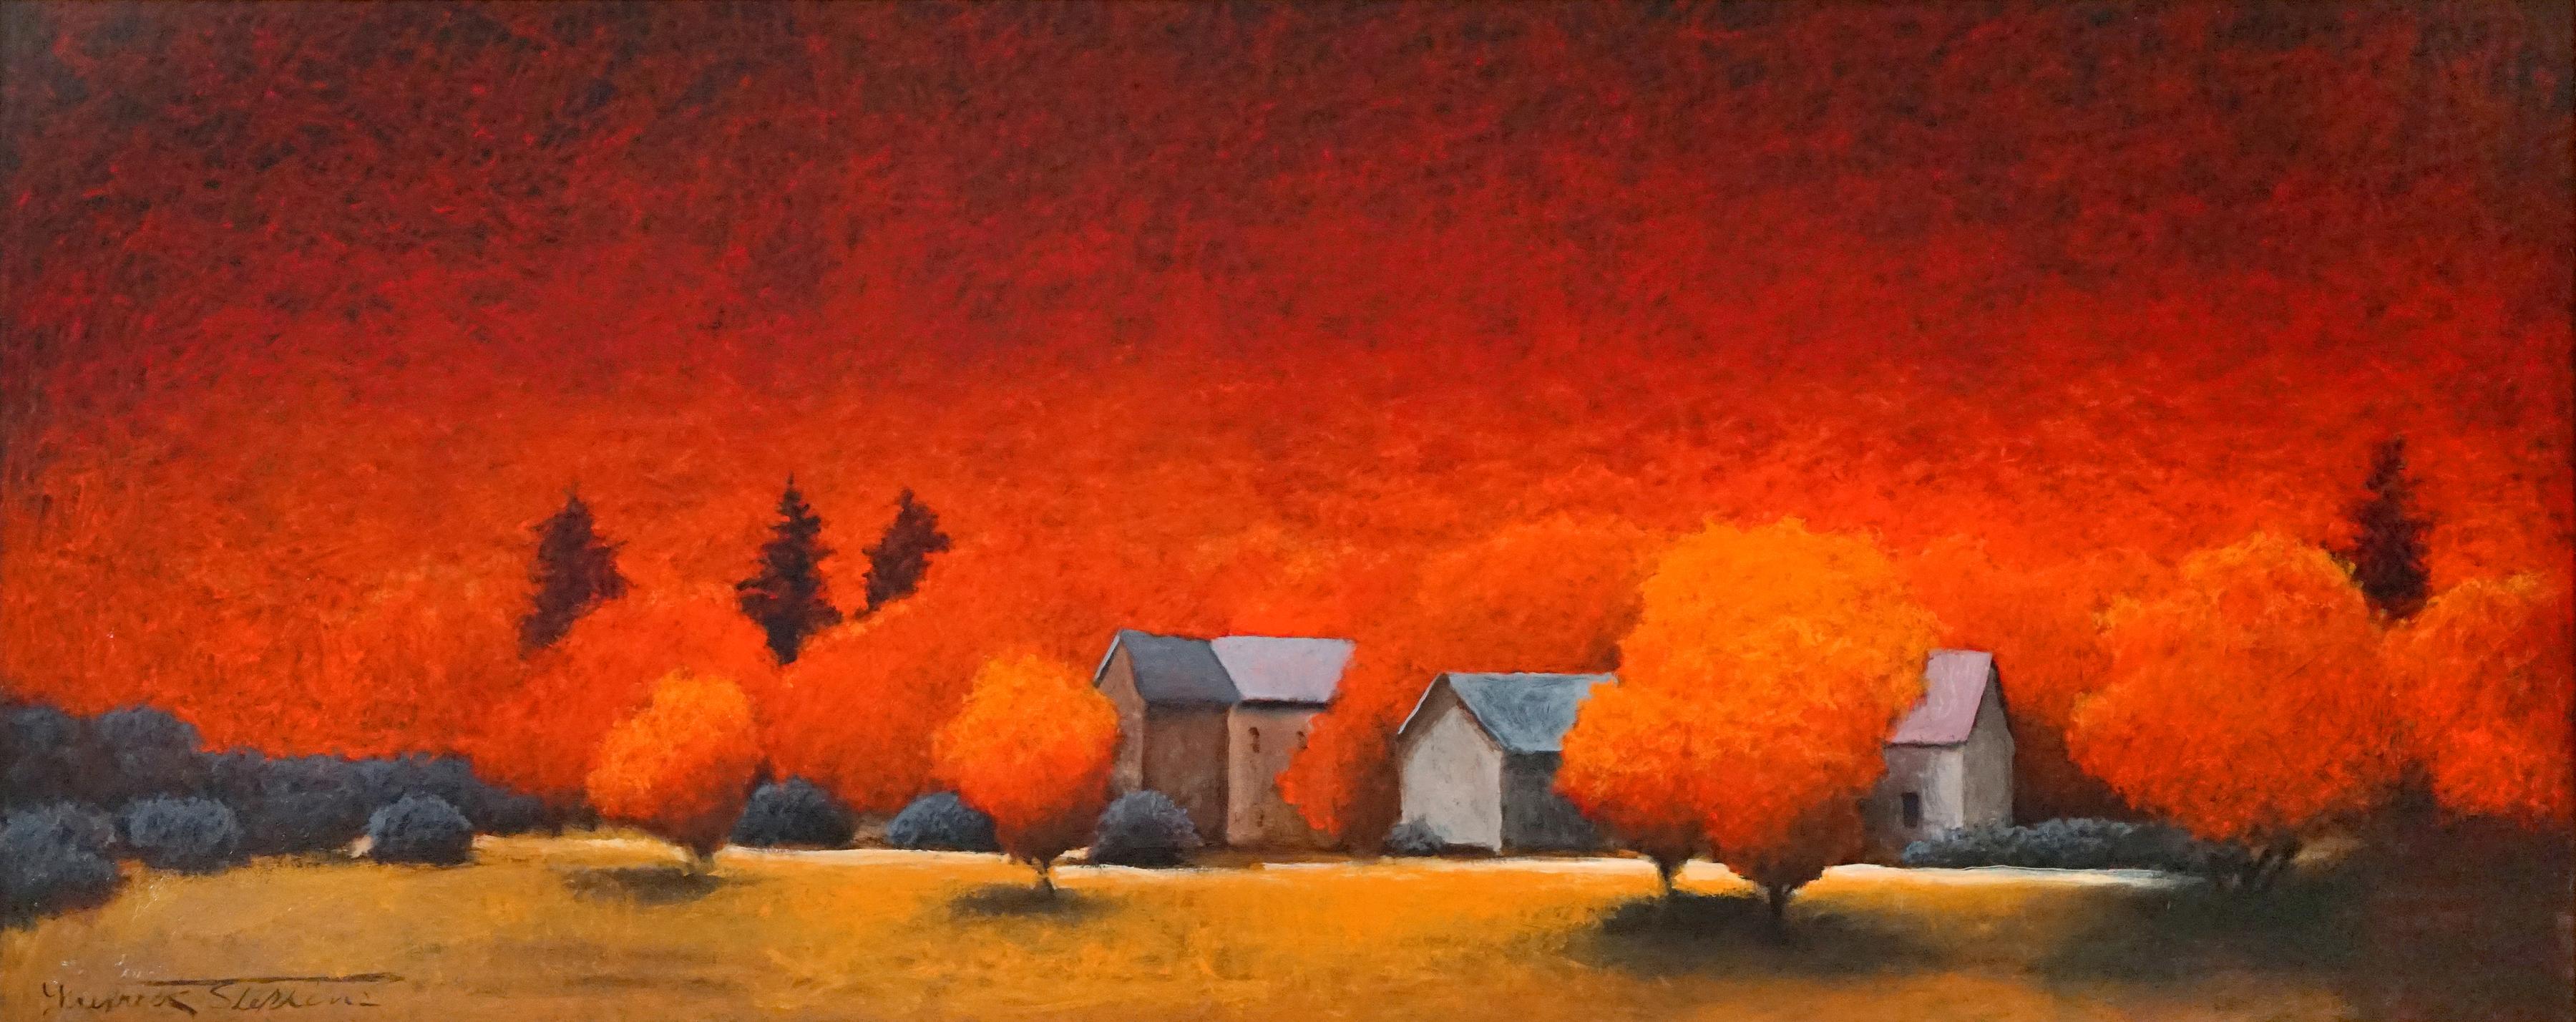 Fredrick Stephens Landscape Painting - Autumn, Tonalism 21 under 31 SW ART magazine artist